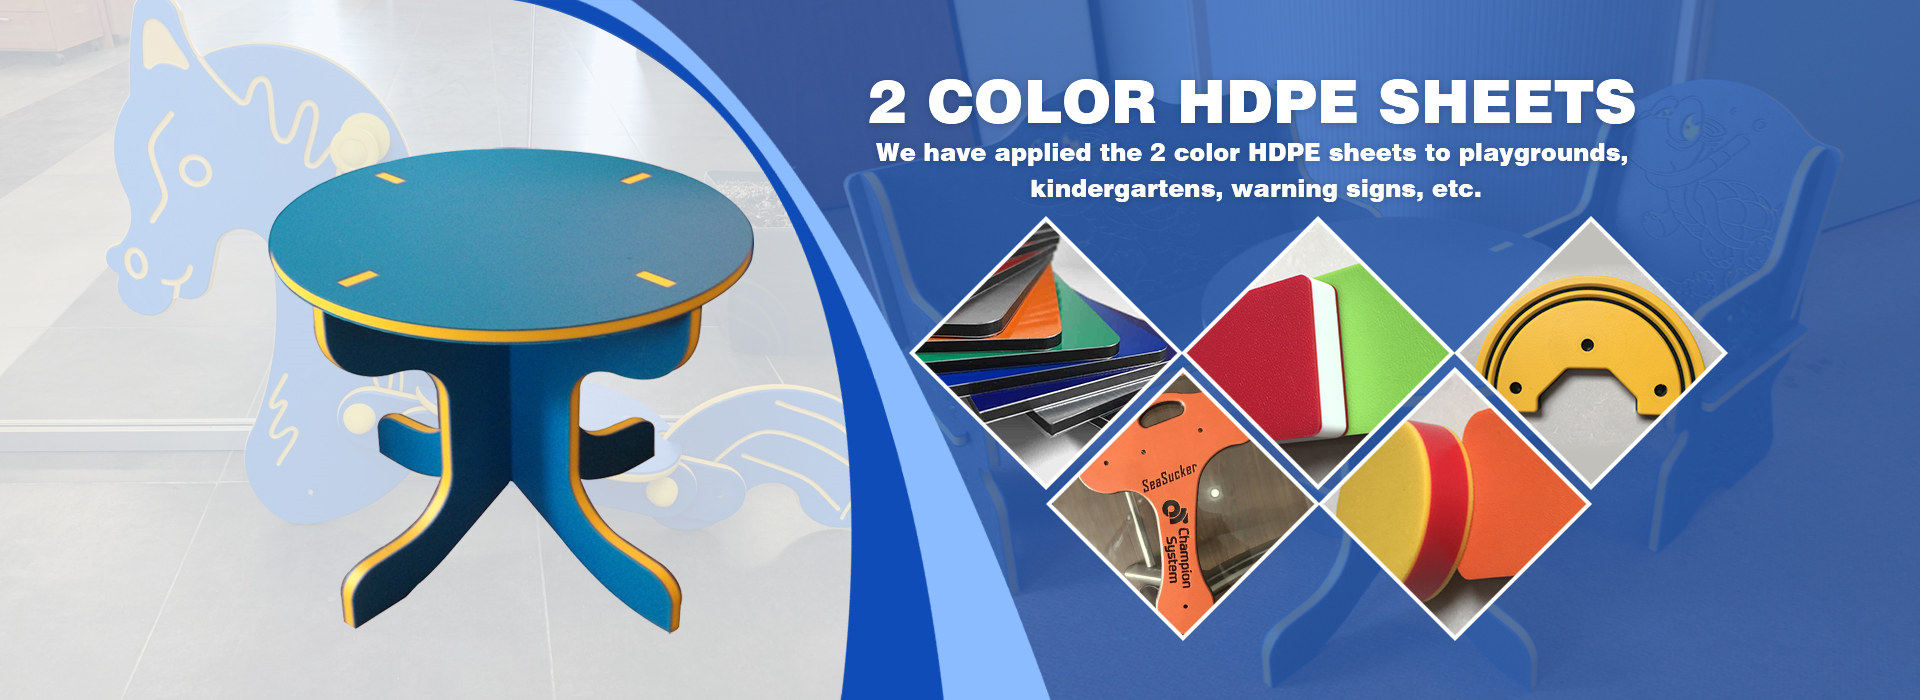 HDPE sheets 4x8